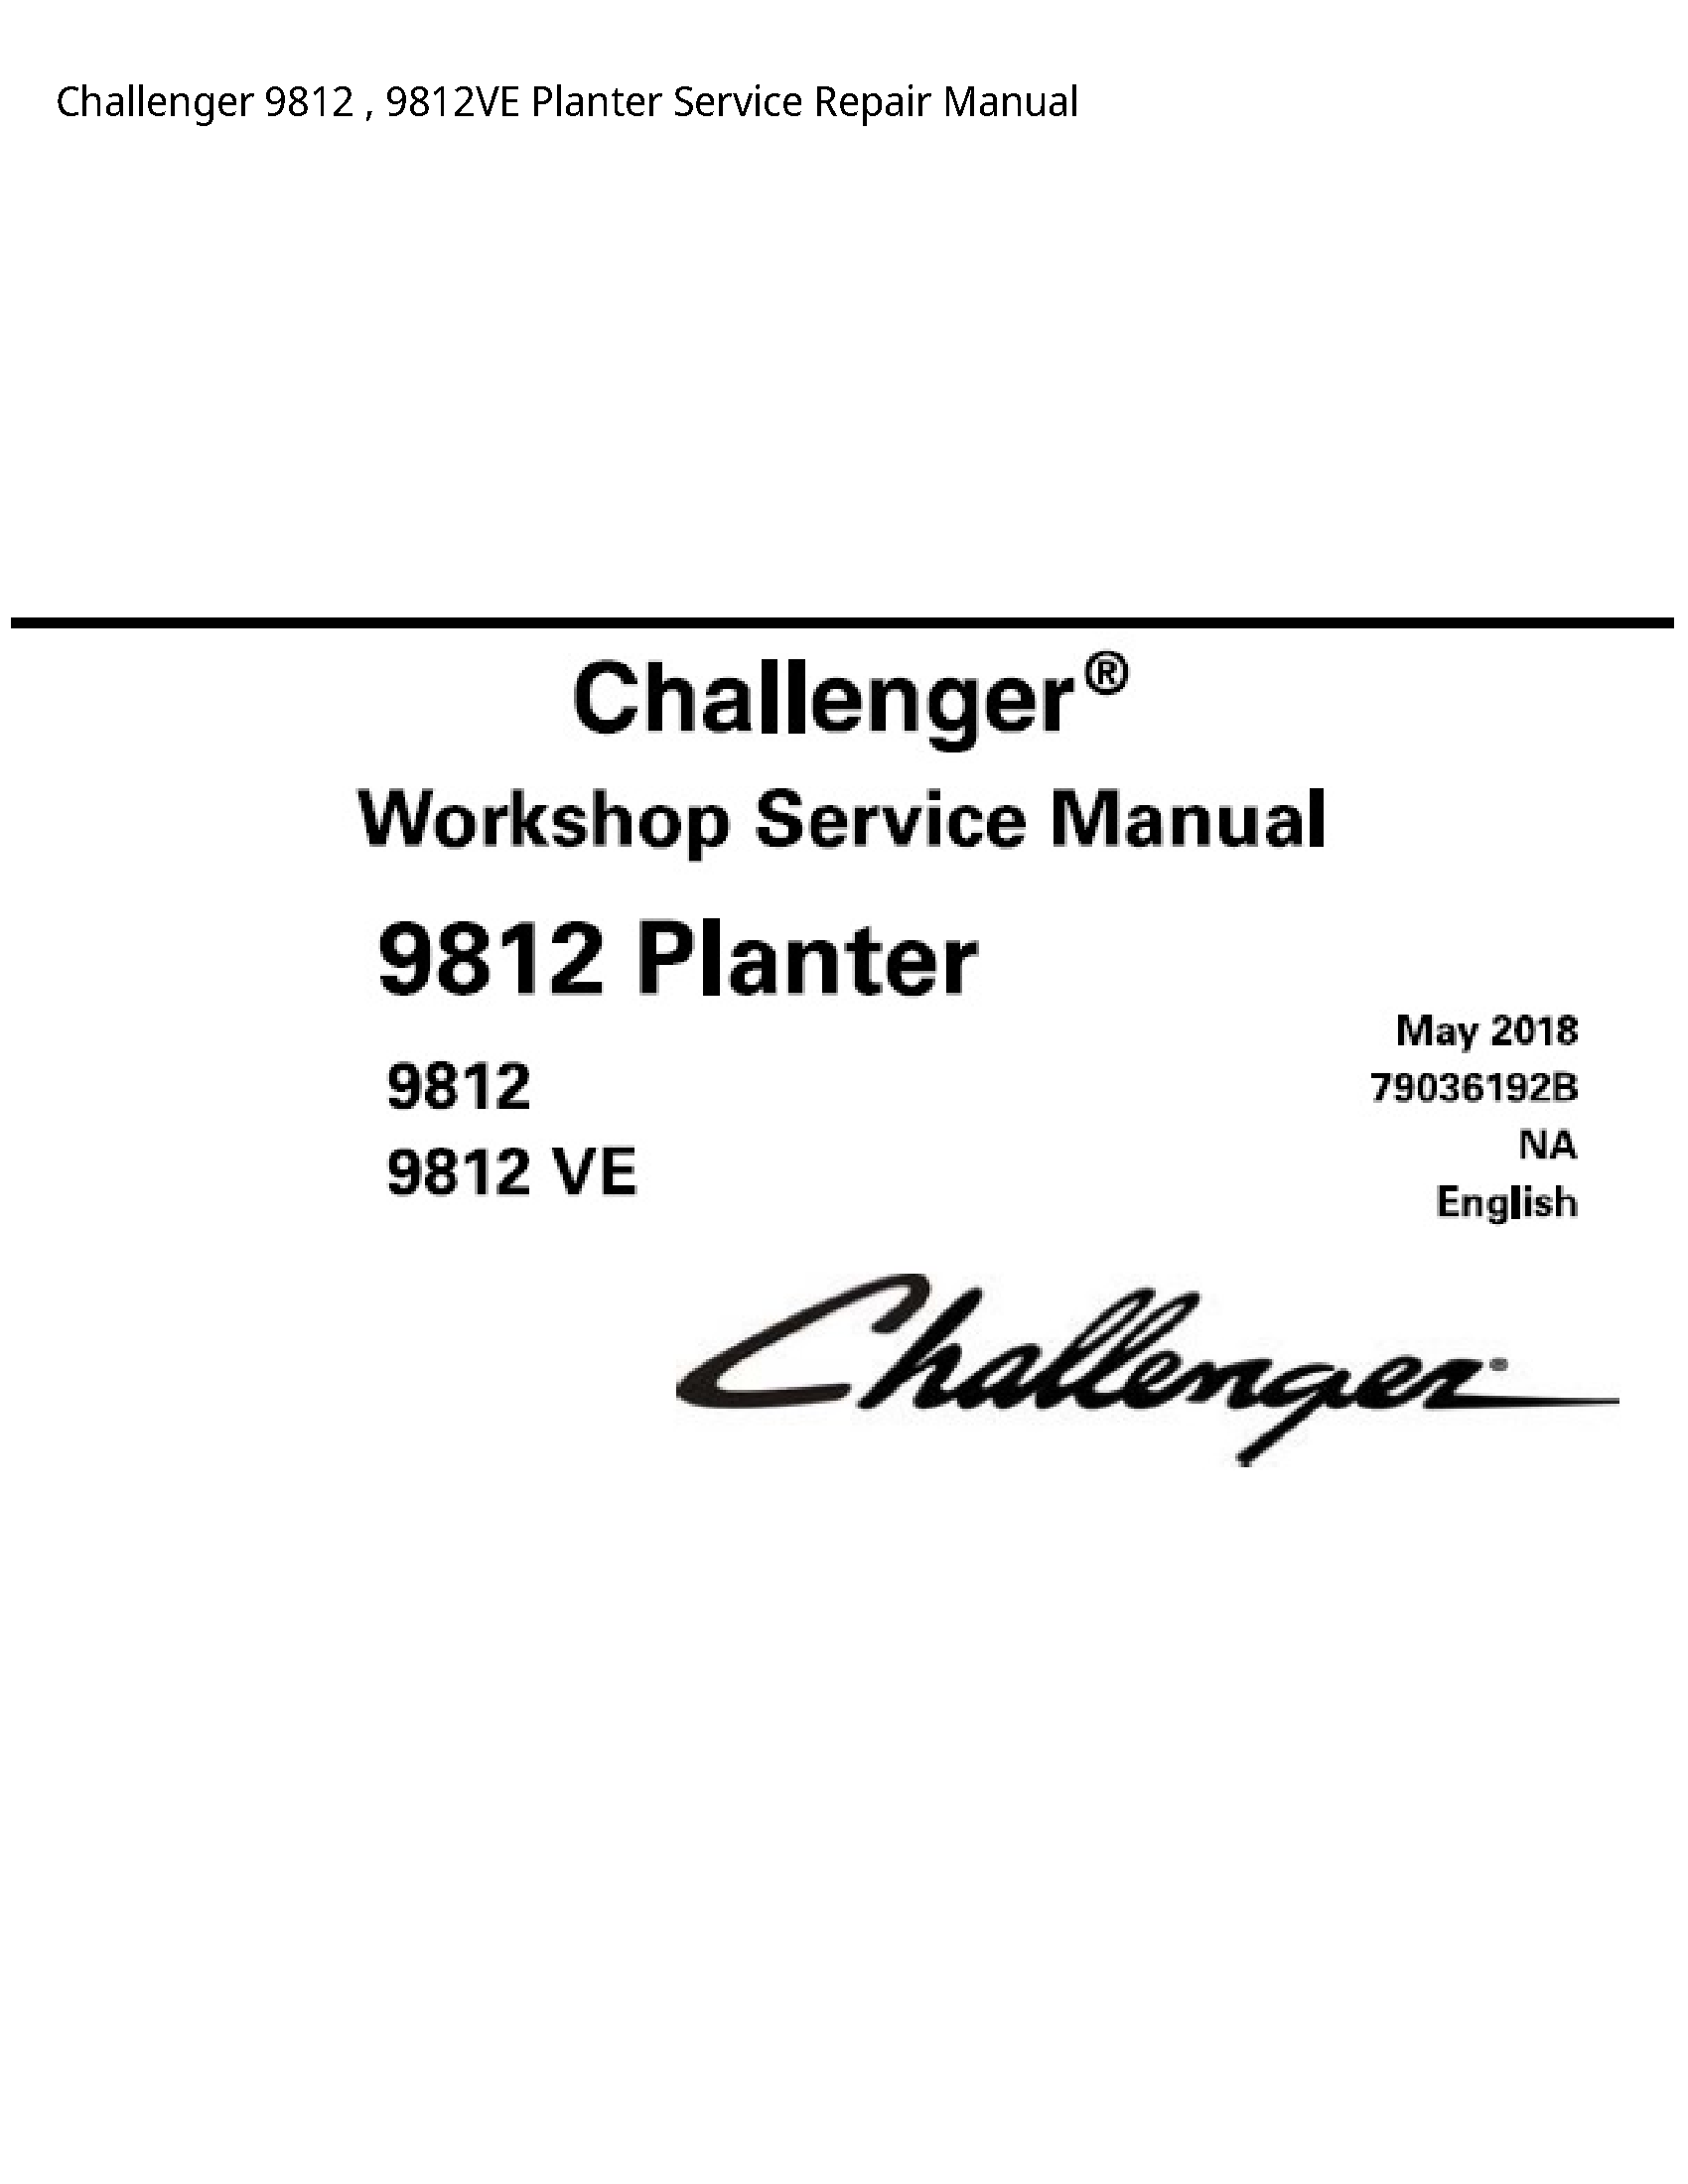 Challenger 9812 Planter manual